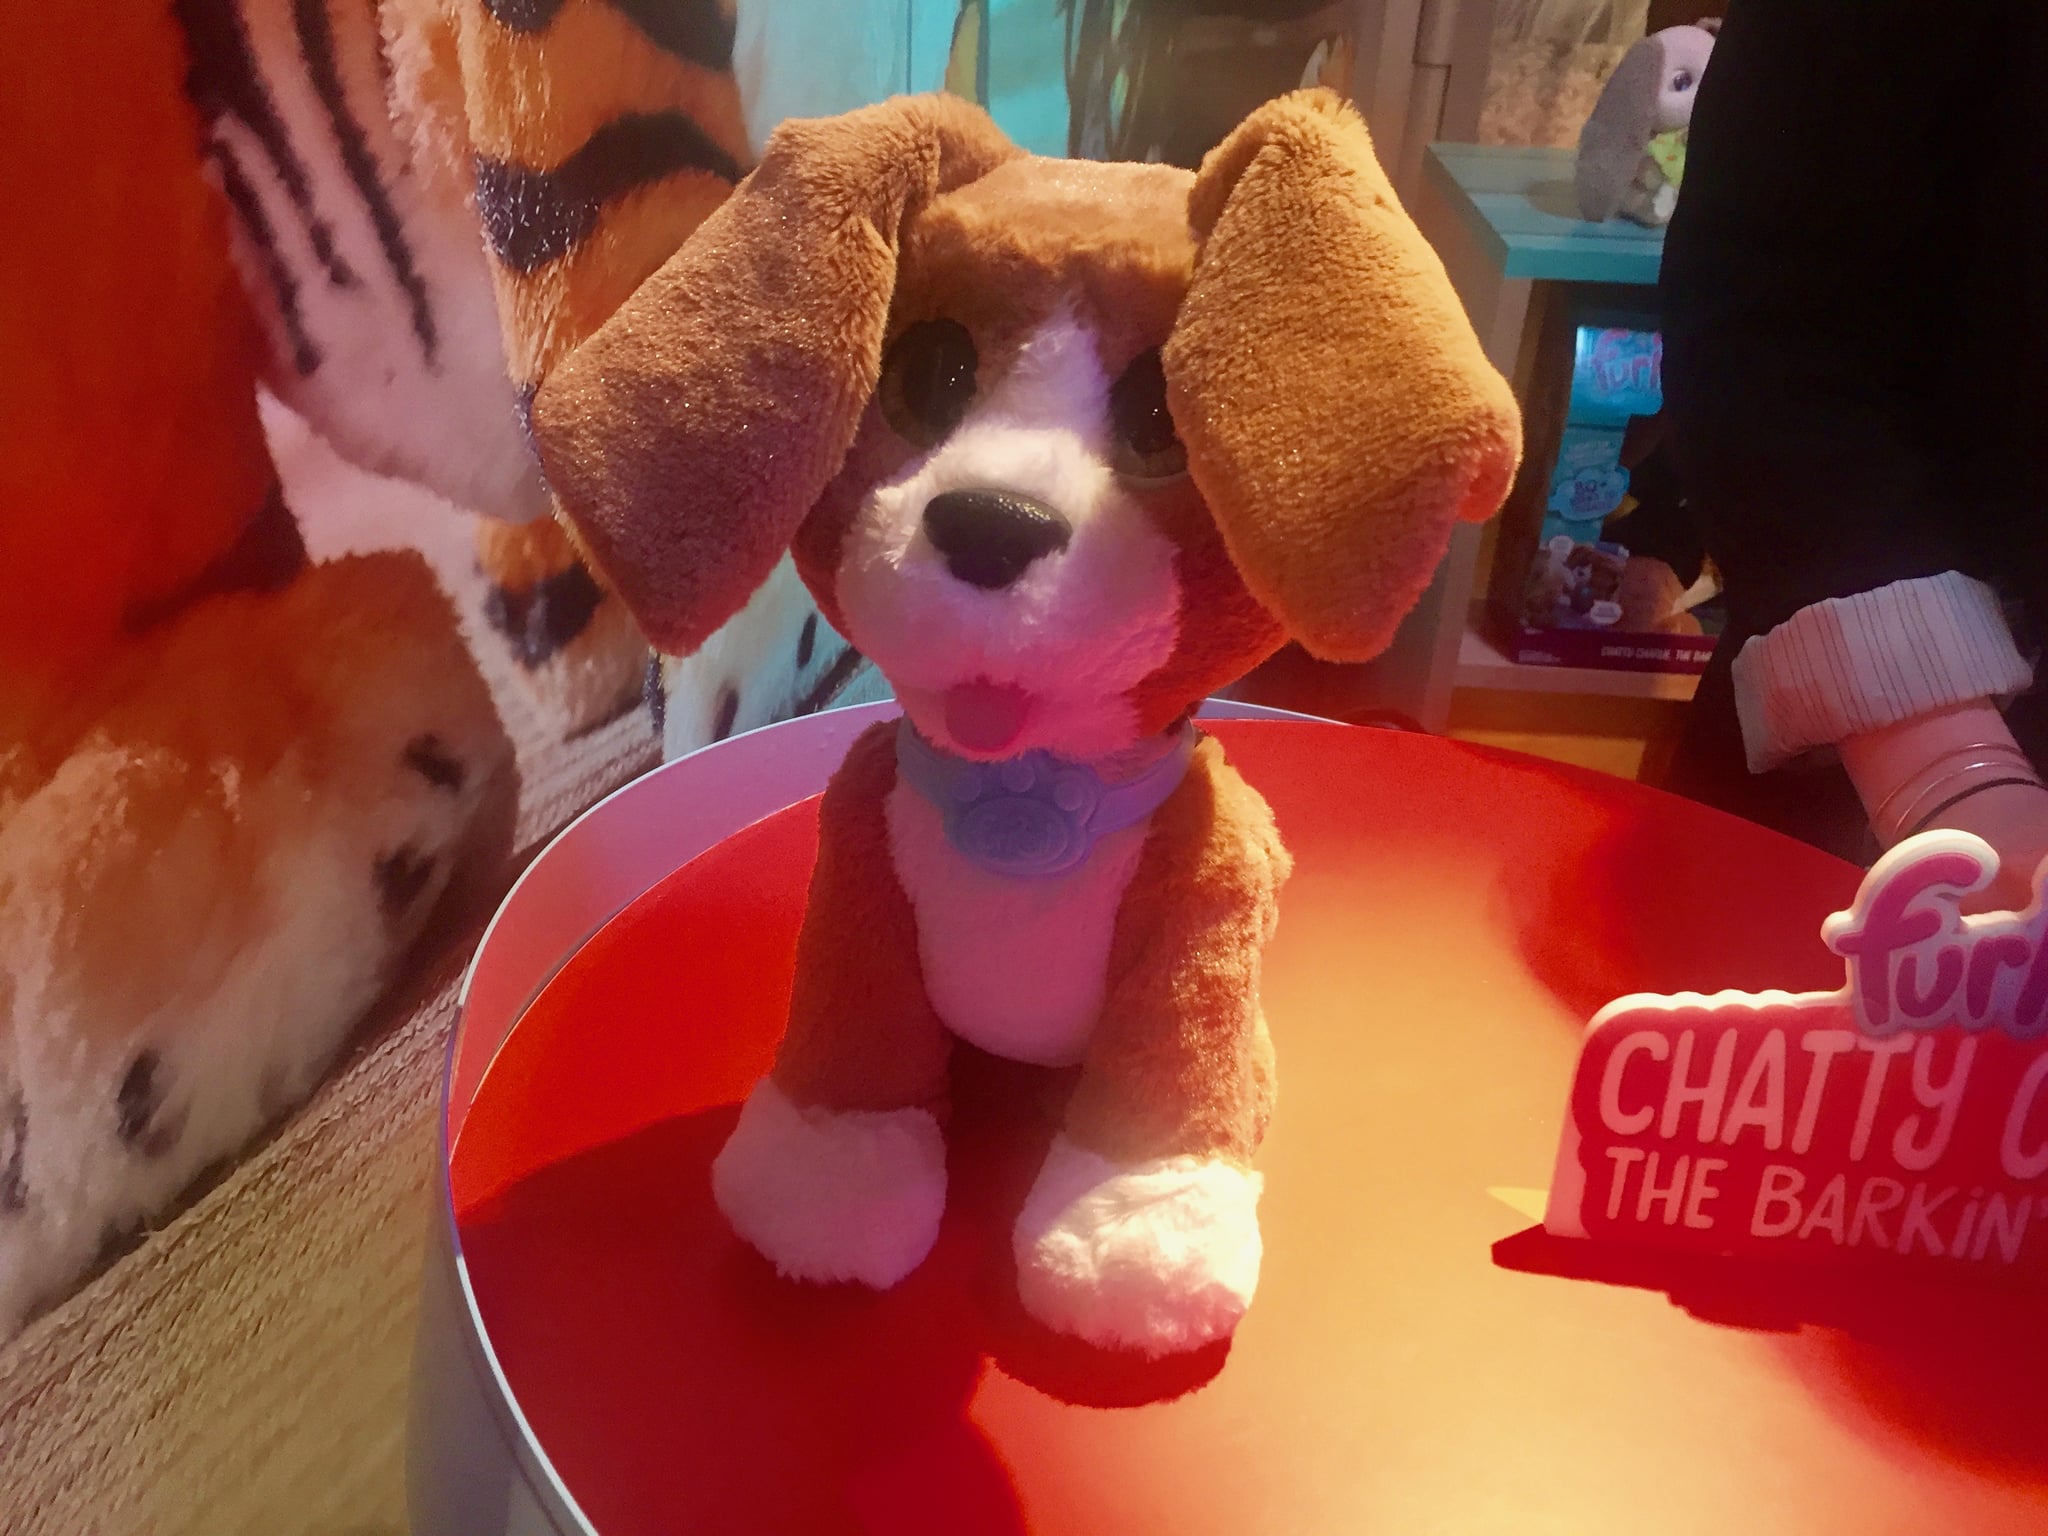 furreal chatty charlie barkin beagle